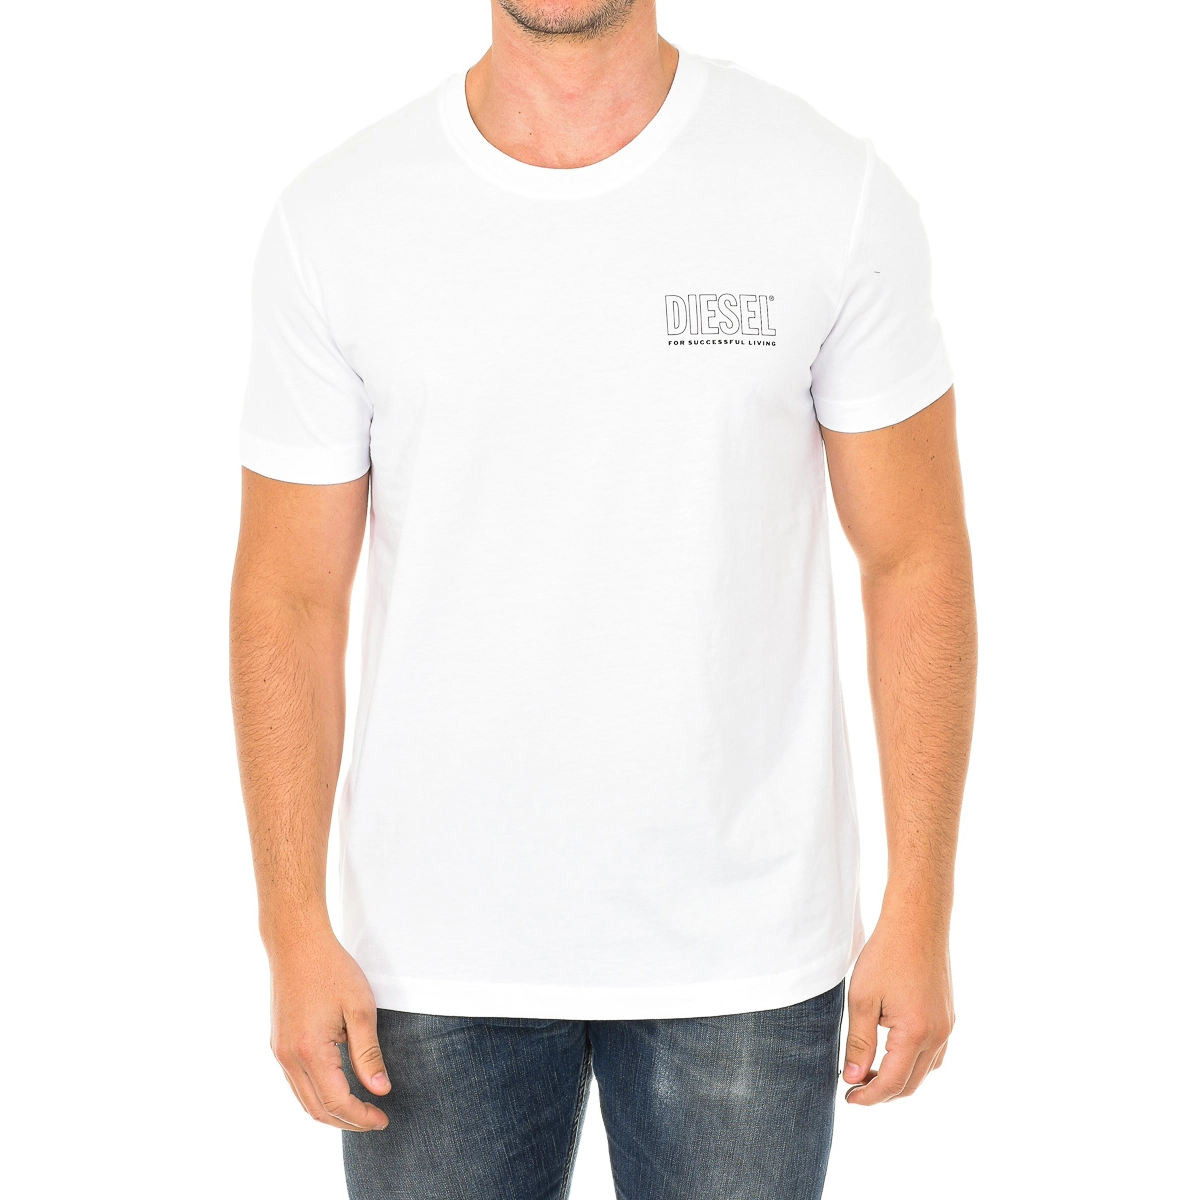 Camiseta de manga corta cuello redondo Diesel 00CG46-0QAZN hombre Talla: XL Color: Blanco 00CG46-0QAZN-100.XL